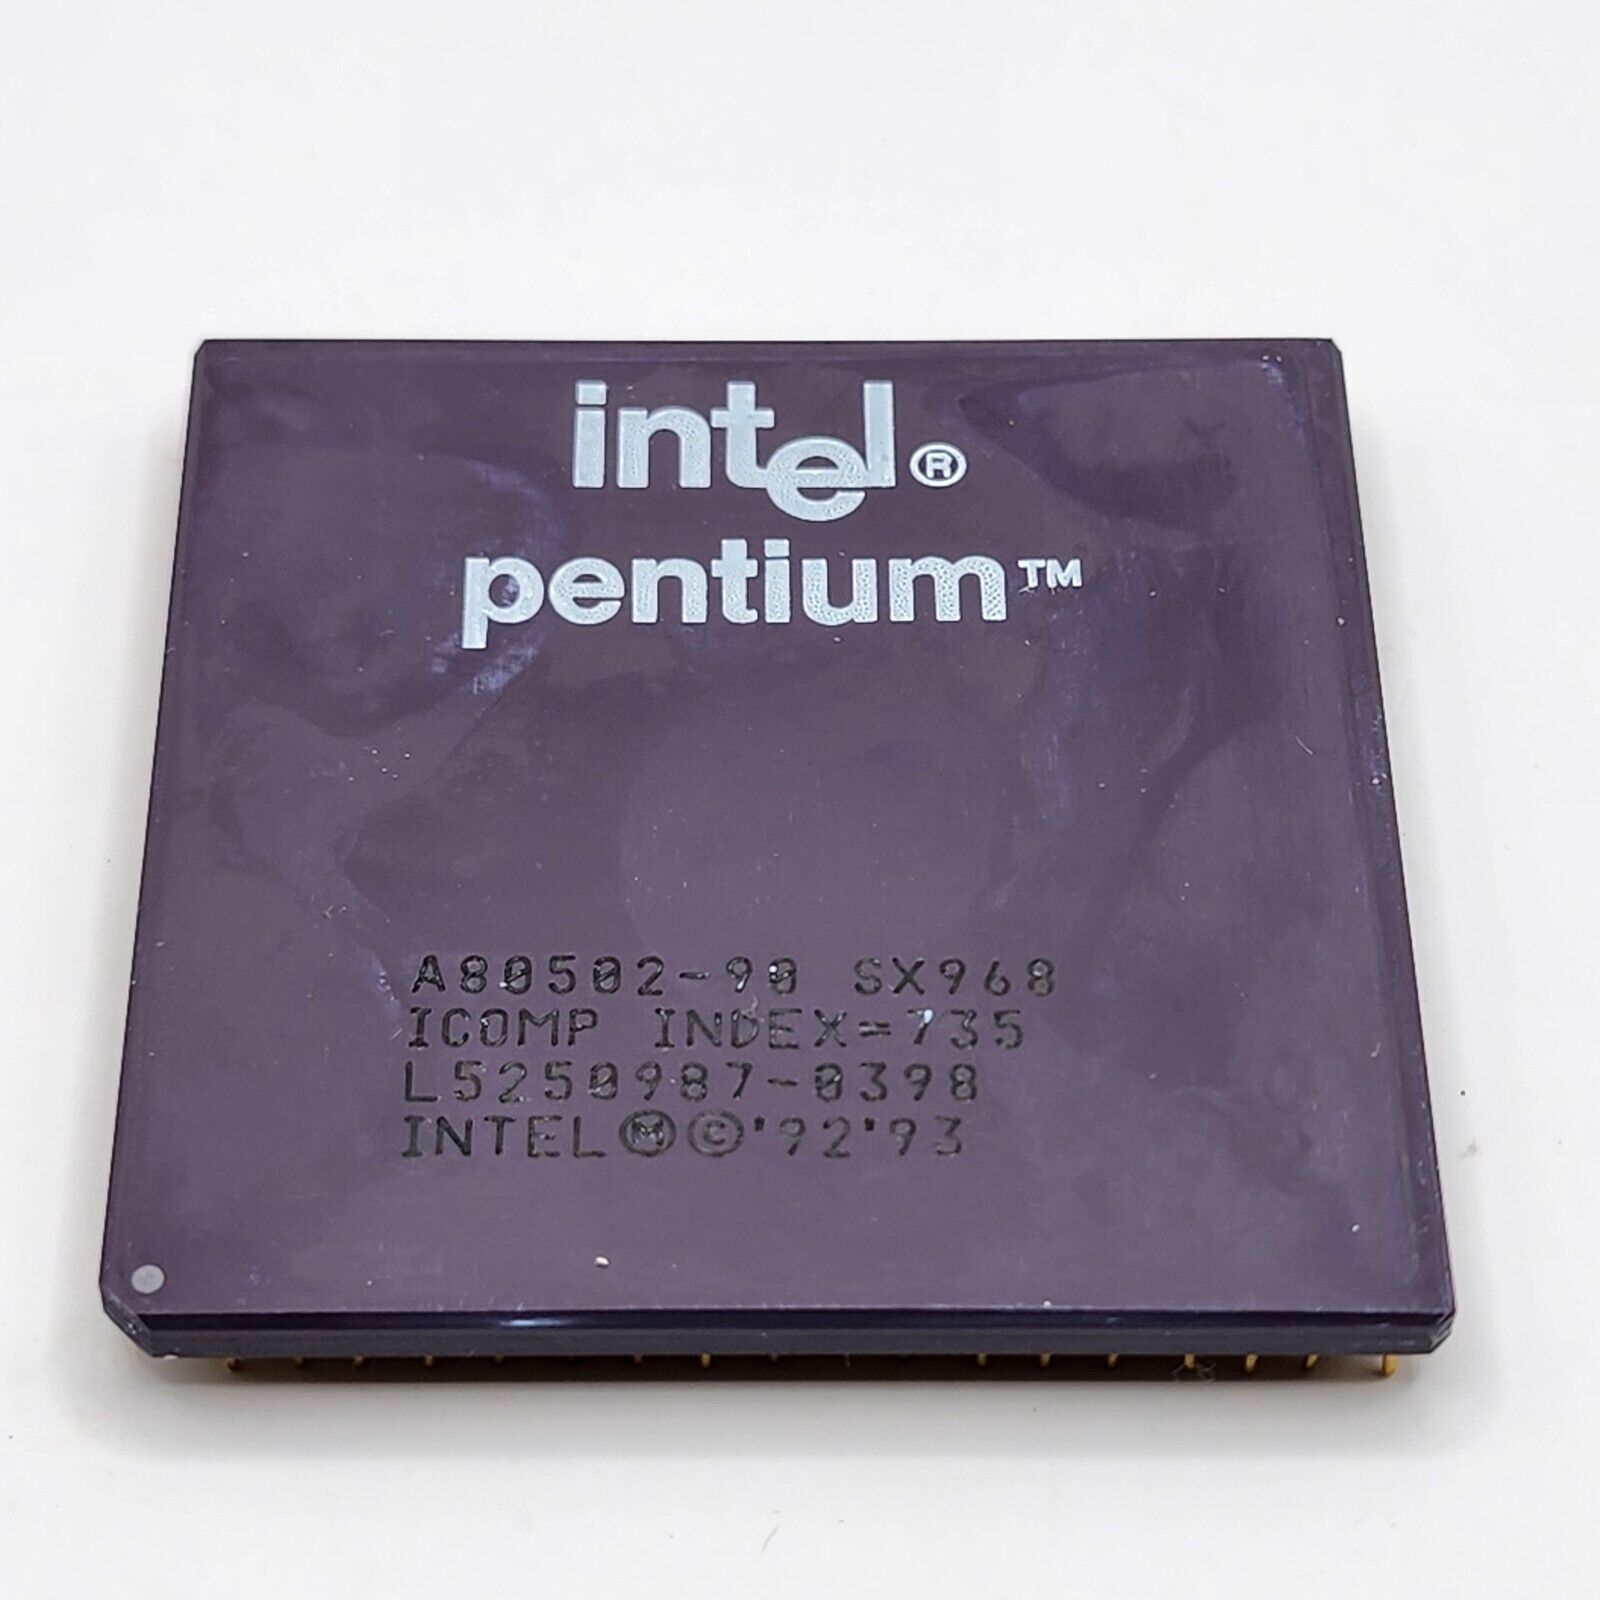 Vintage Intel Pentium 90 MHz A80502-90 SX968 Socket 5 & 7 - Collectable - Gold